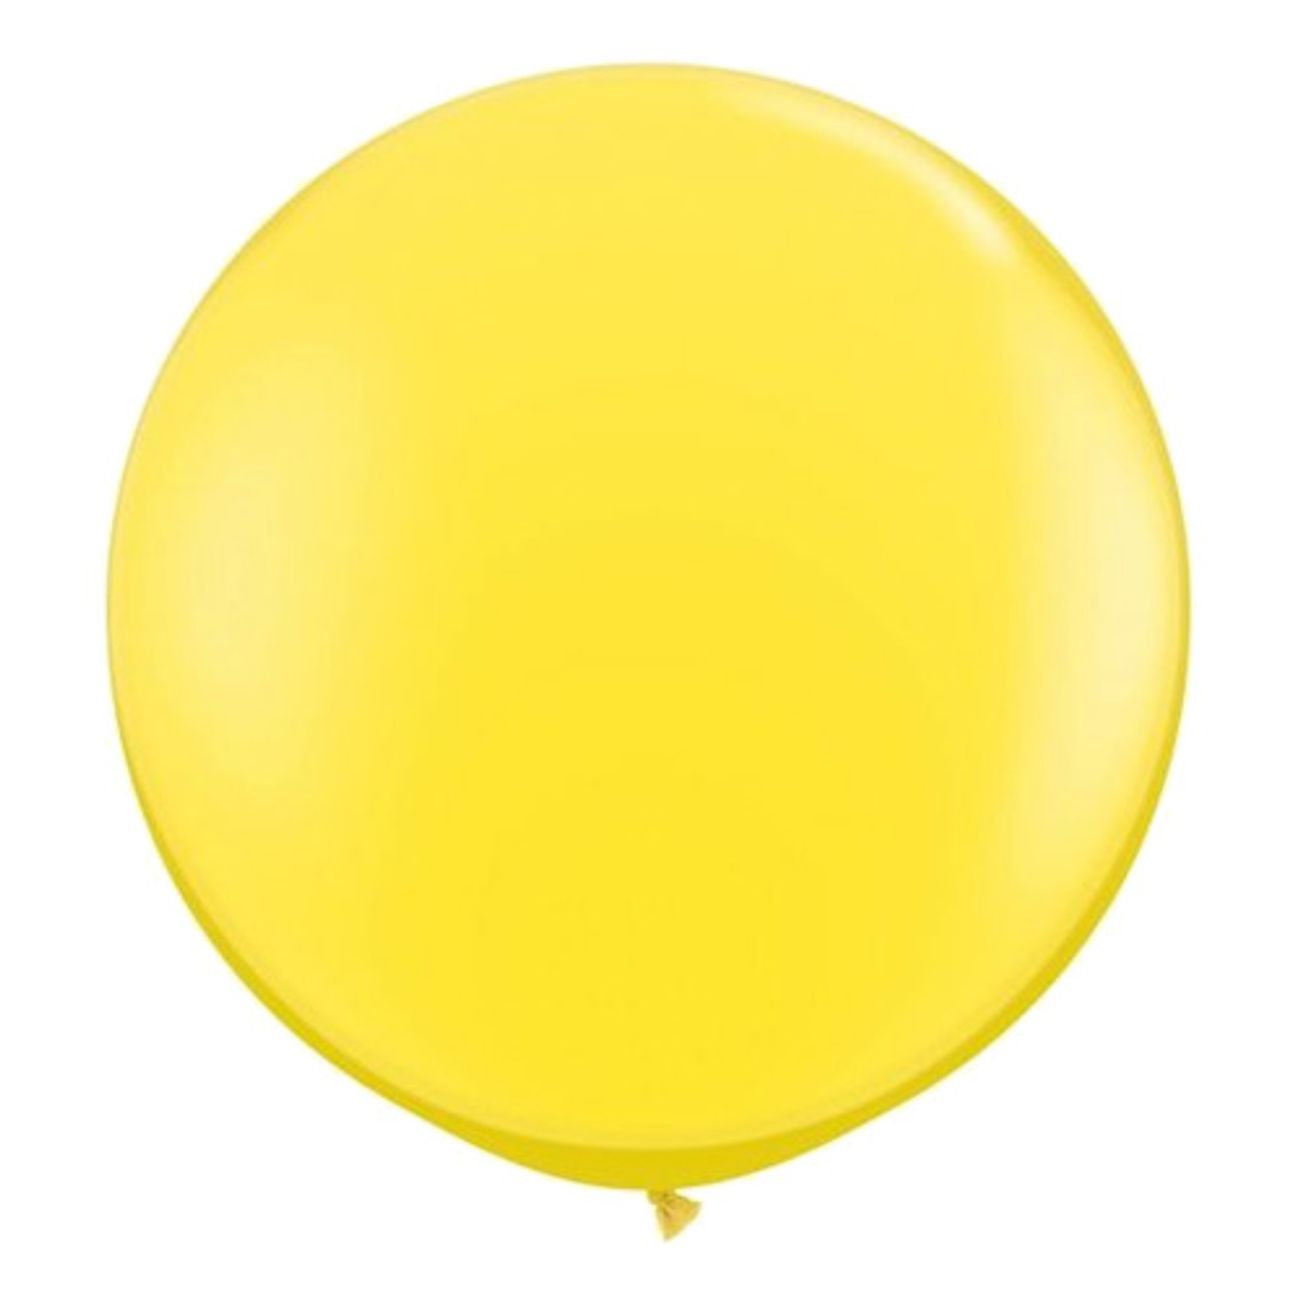 jatteballong-gul-1